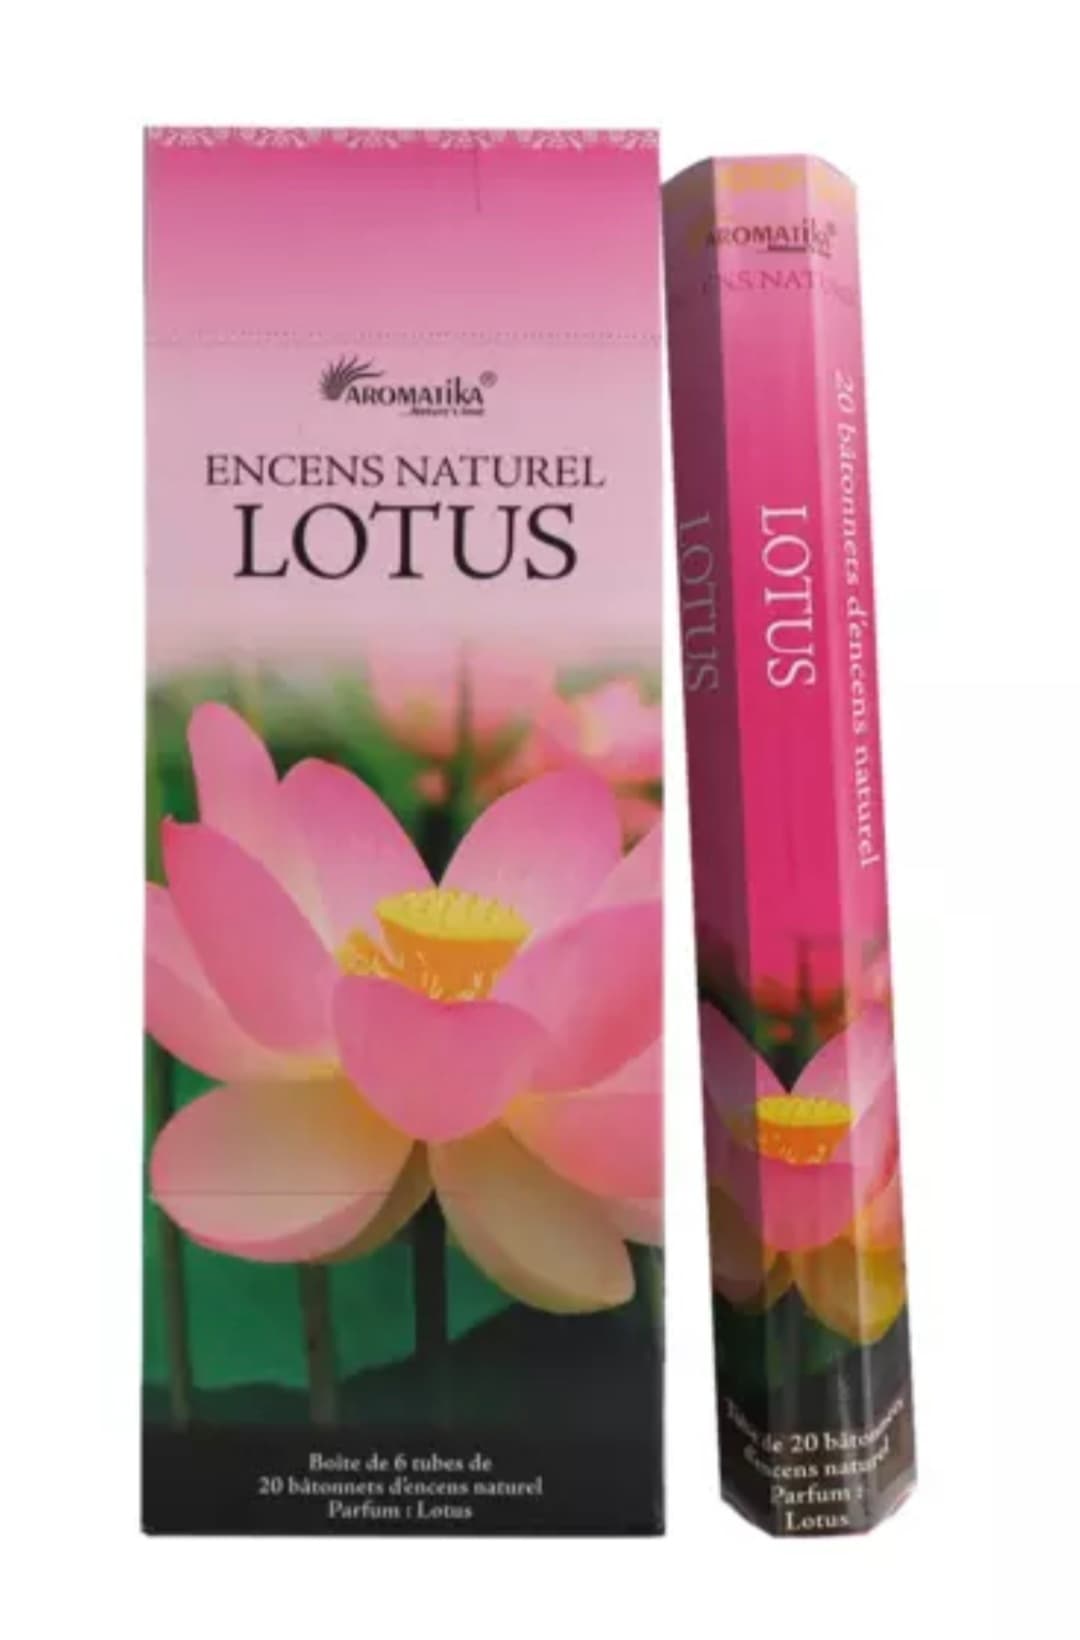 encens lotus massala aromatika